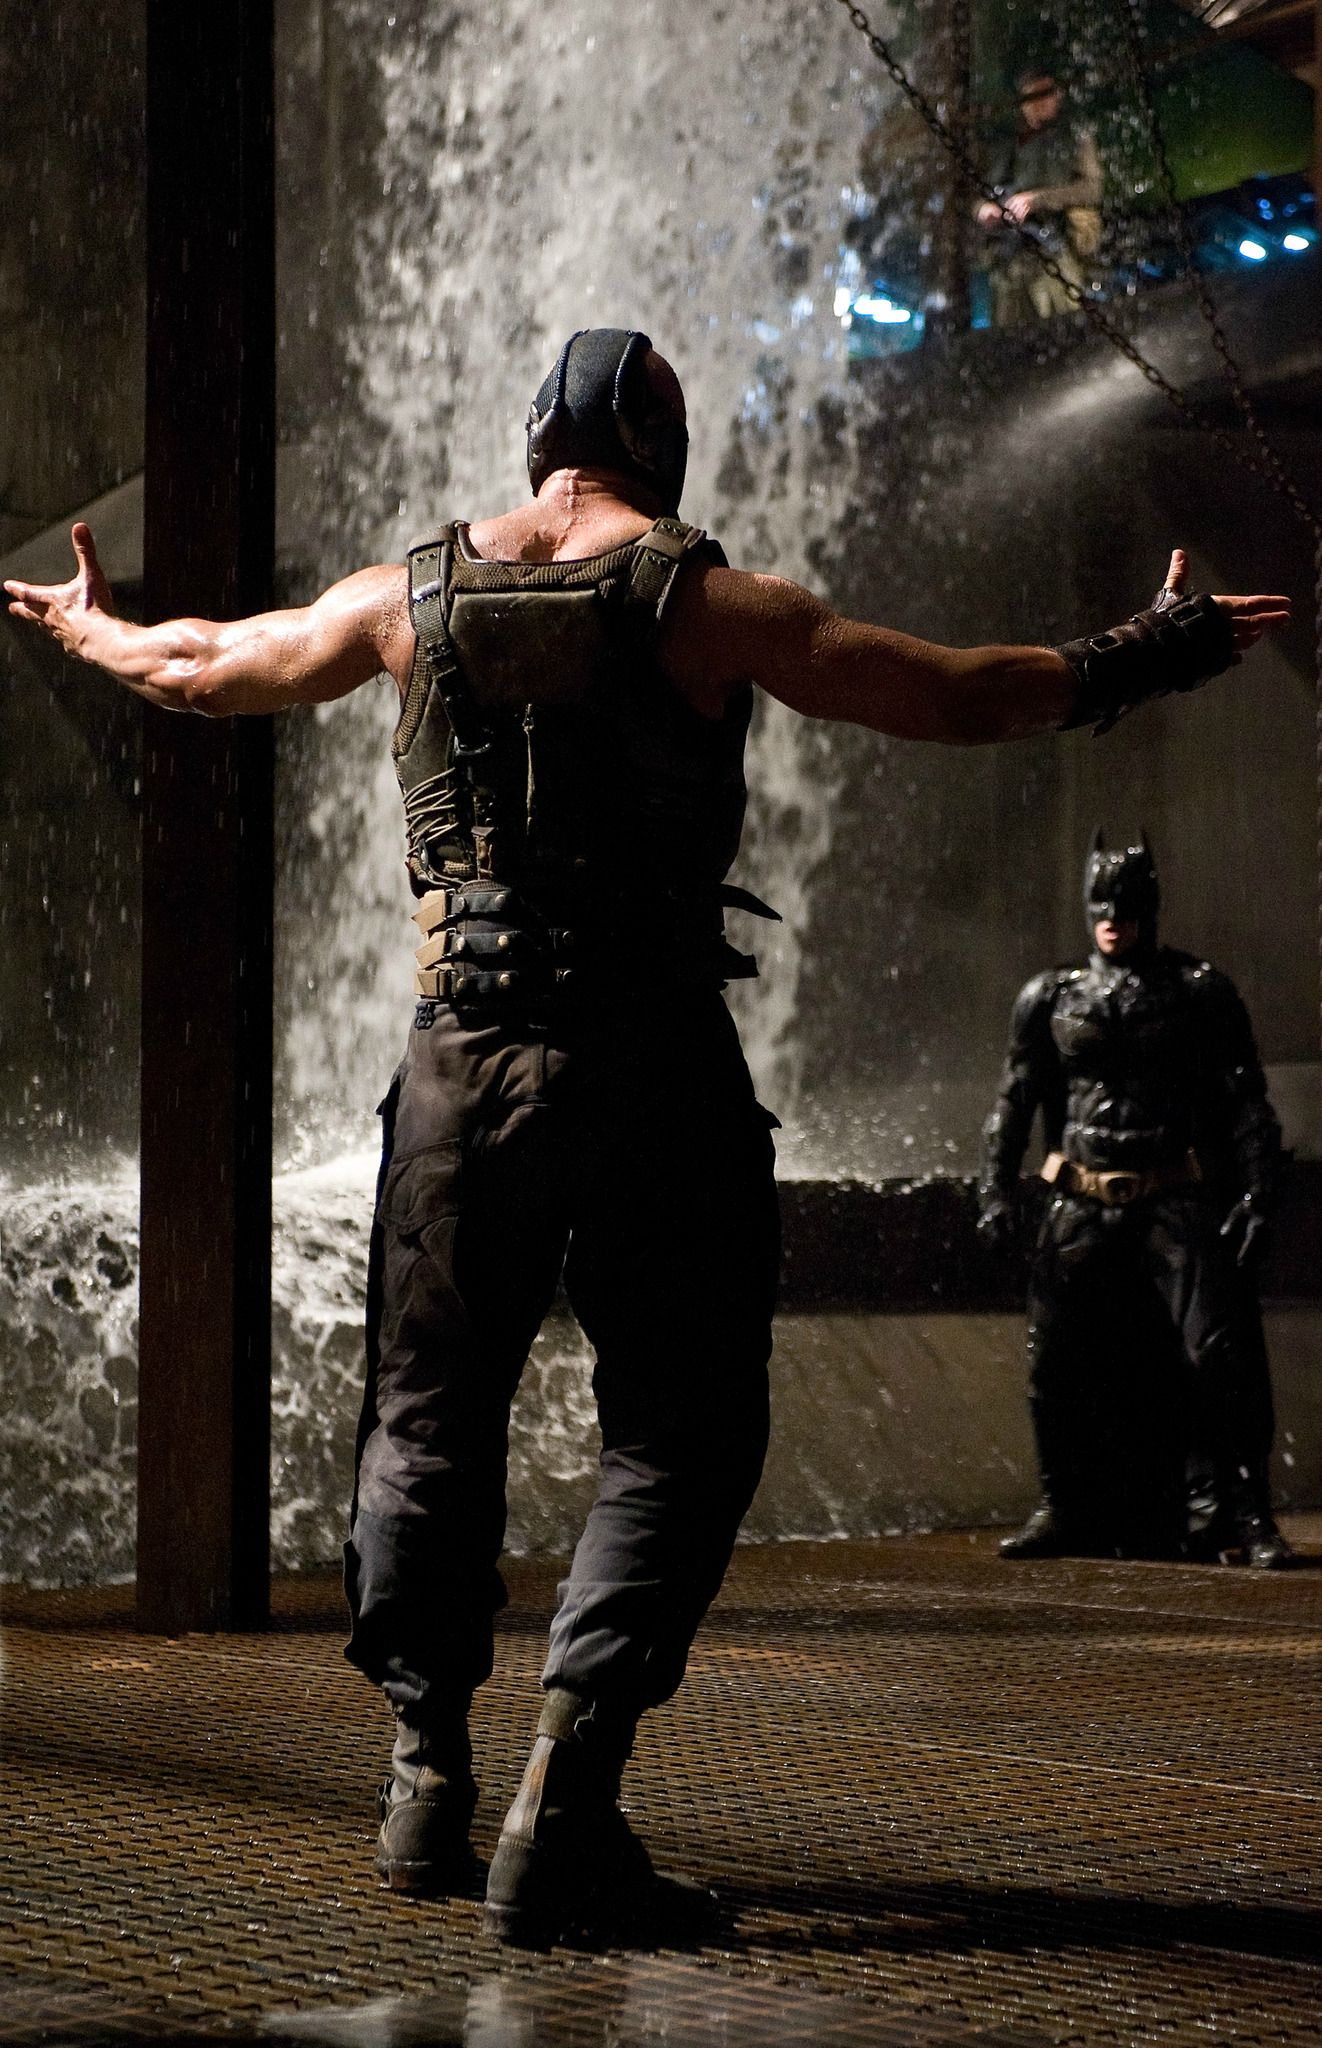 Amazoncom: The Dark Knight Rises Blu-ray: Christian